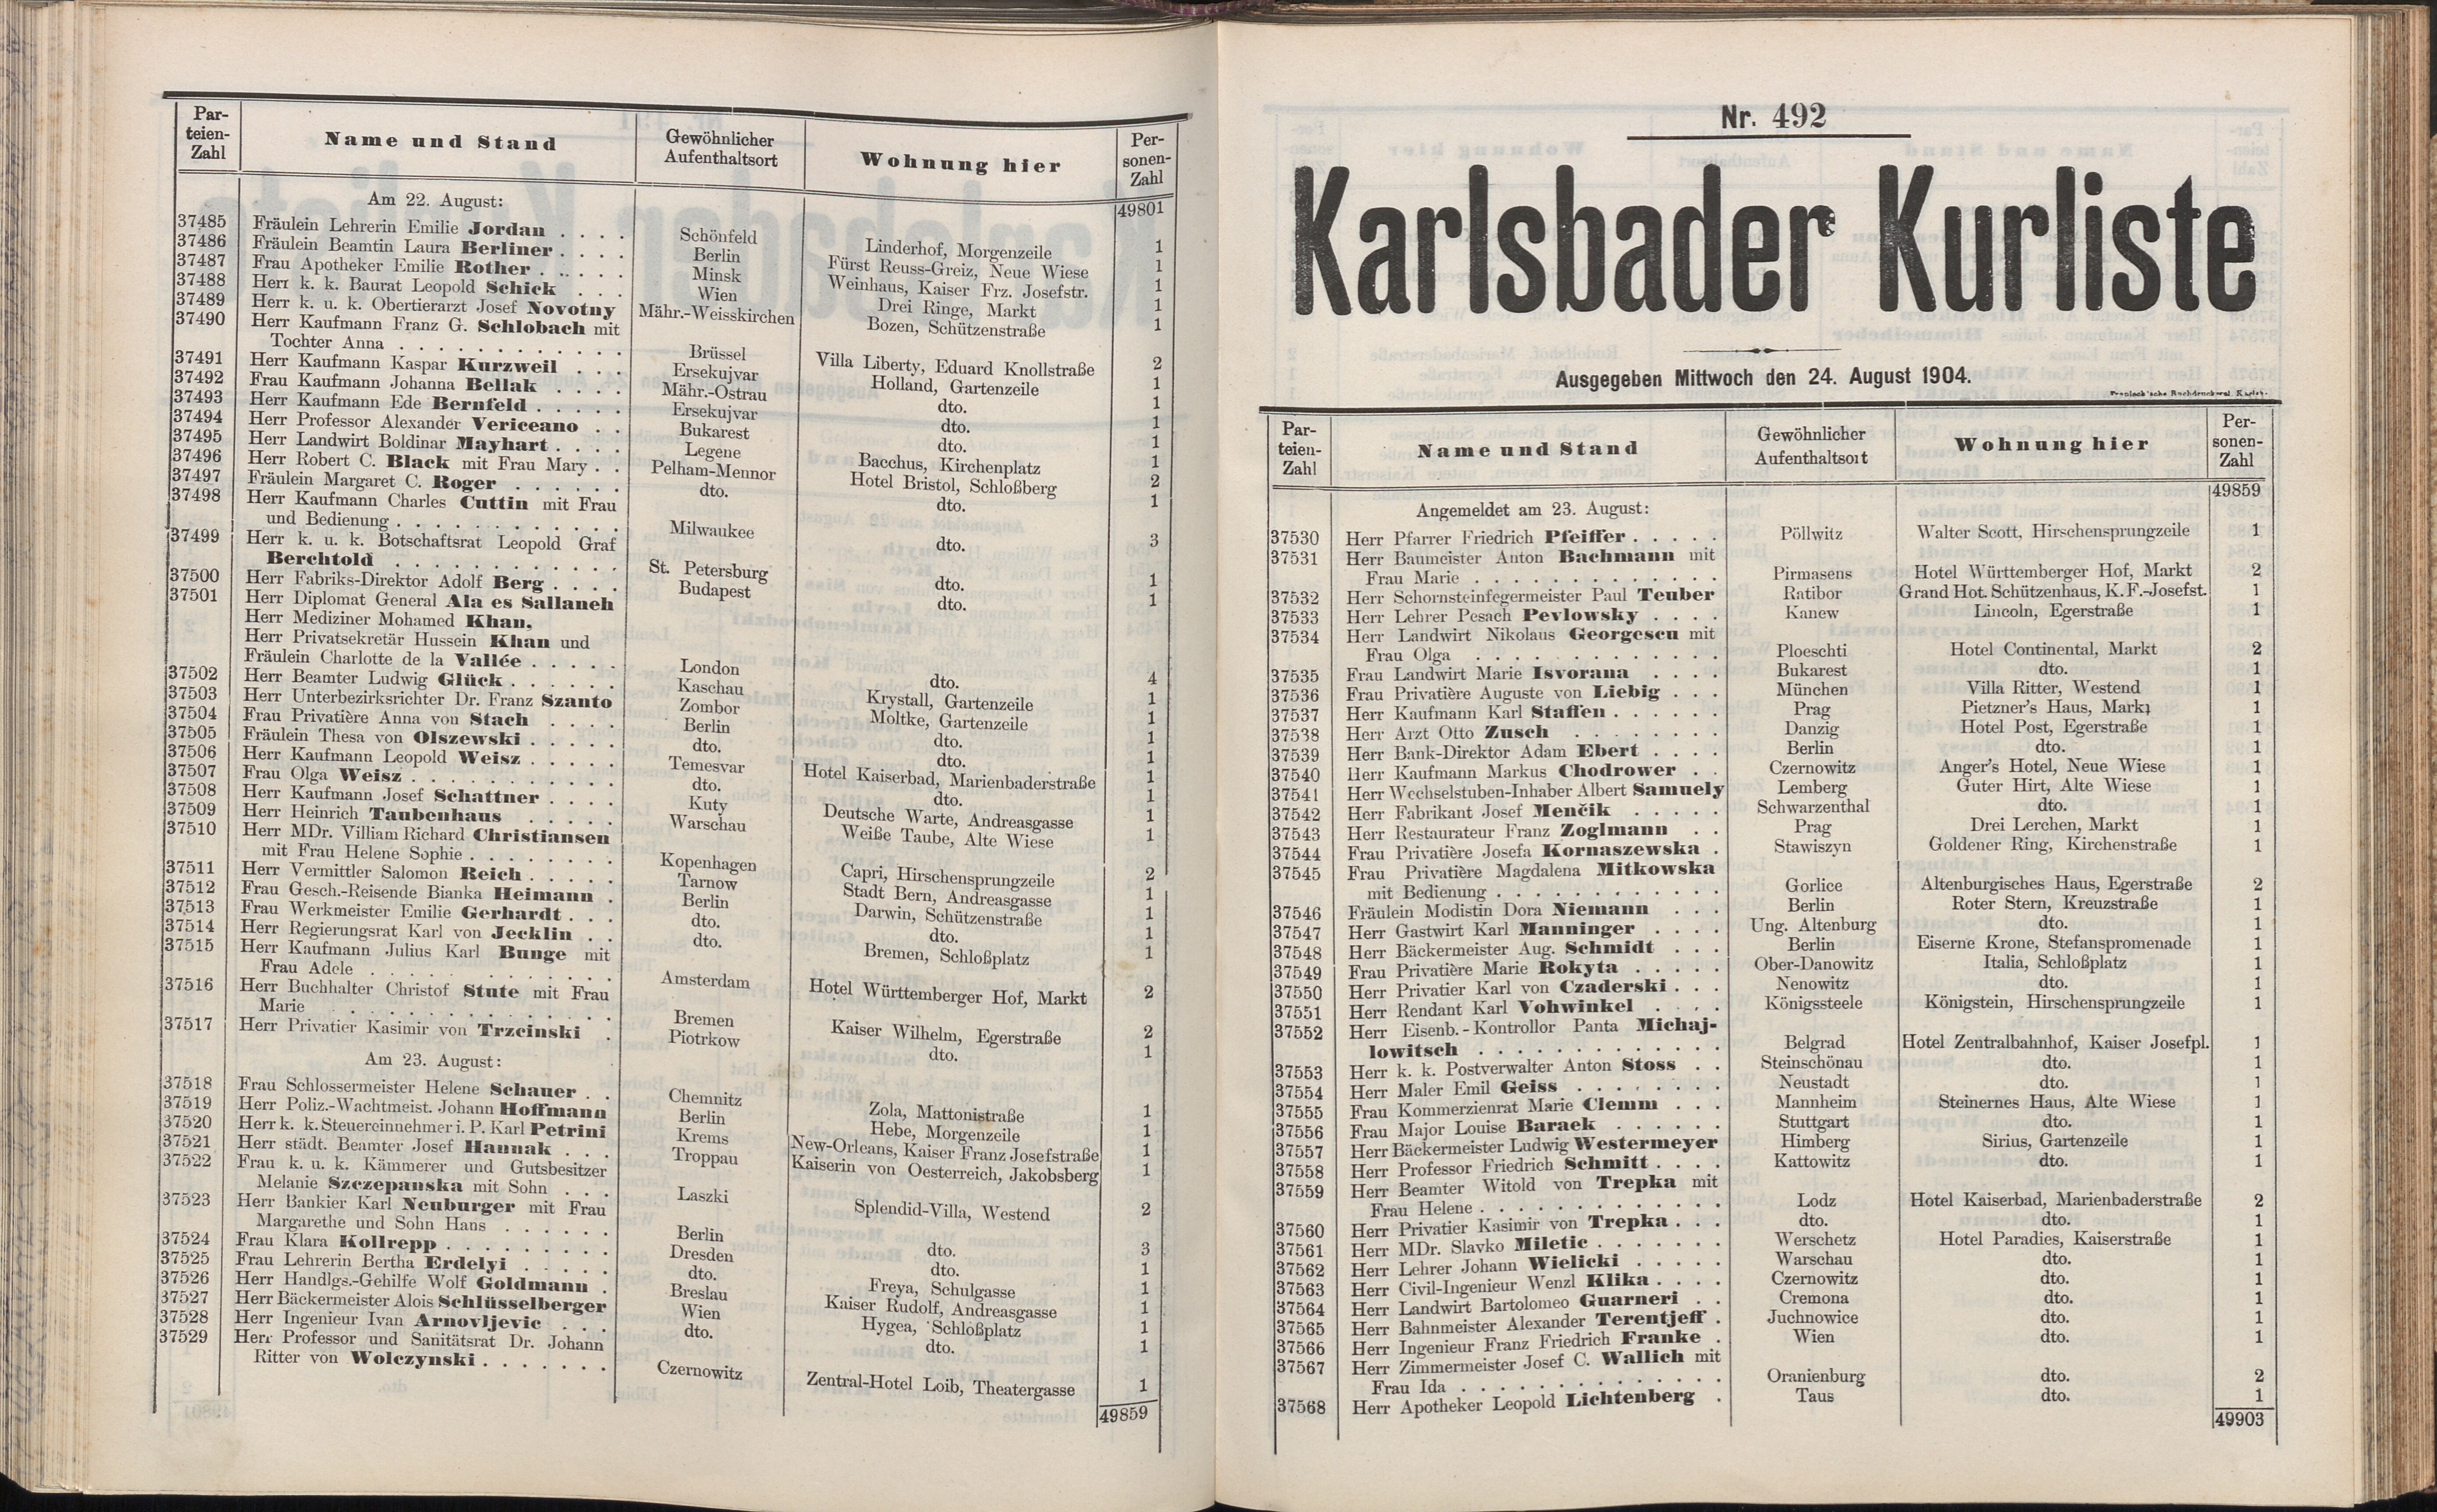 514. soap-kv_knihovna_karlsbader-kurliste-1904_5150